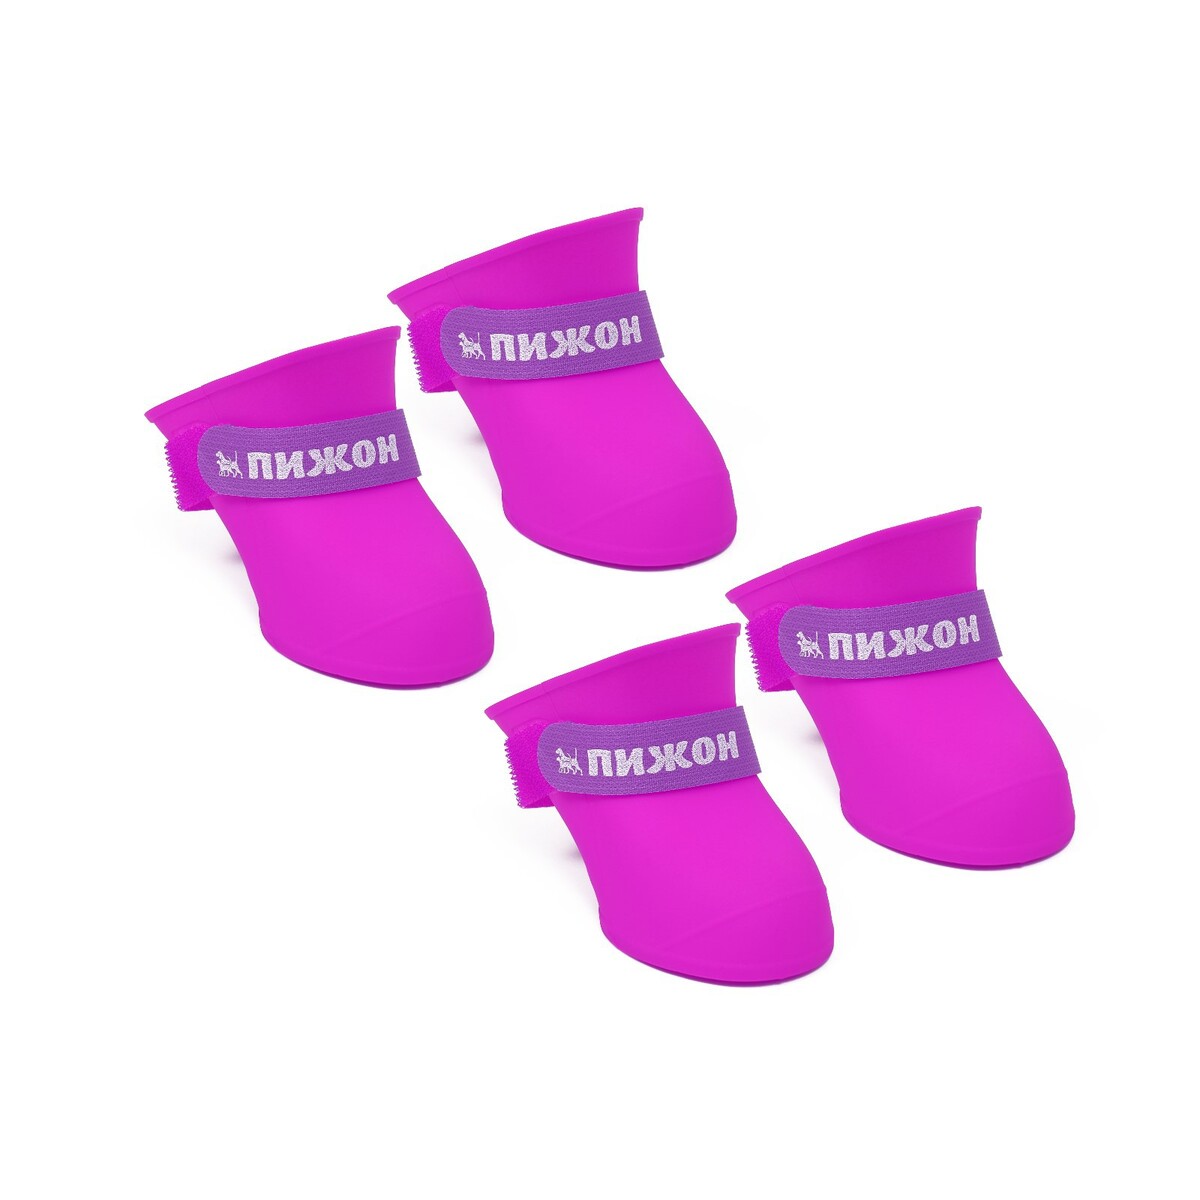 фото Сапоги резиновые пижон, набор 4 шт., р-р l (подошва 5.7 х 4.5 см), фиолетовые